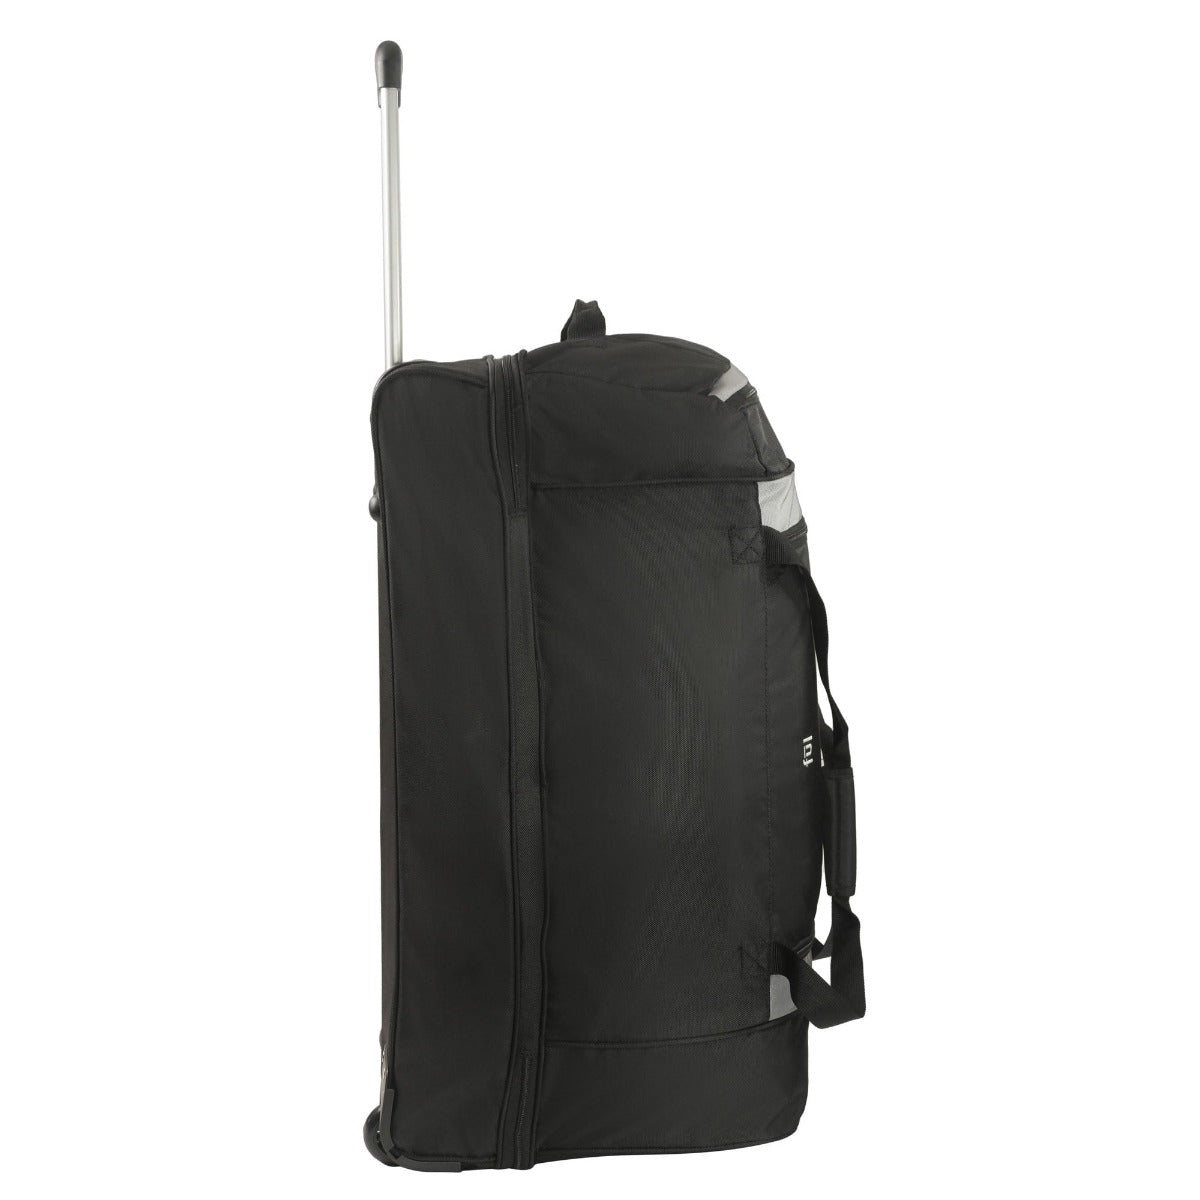 Buy Duffel Wheeler Bag for Travel, 2 Wheel Luggage Bag